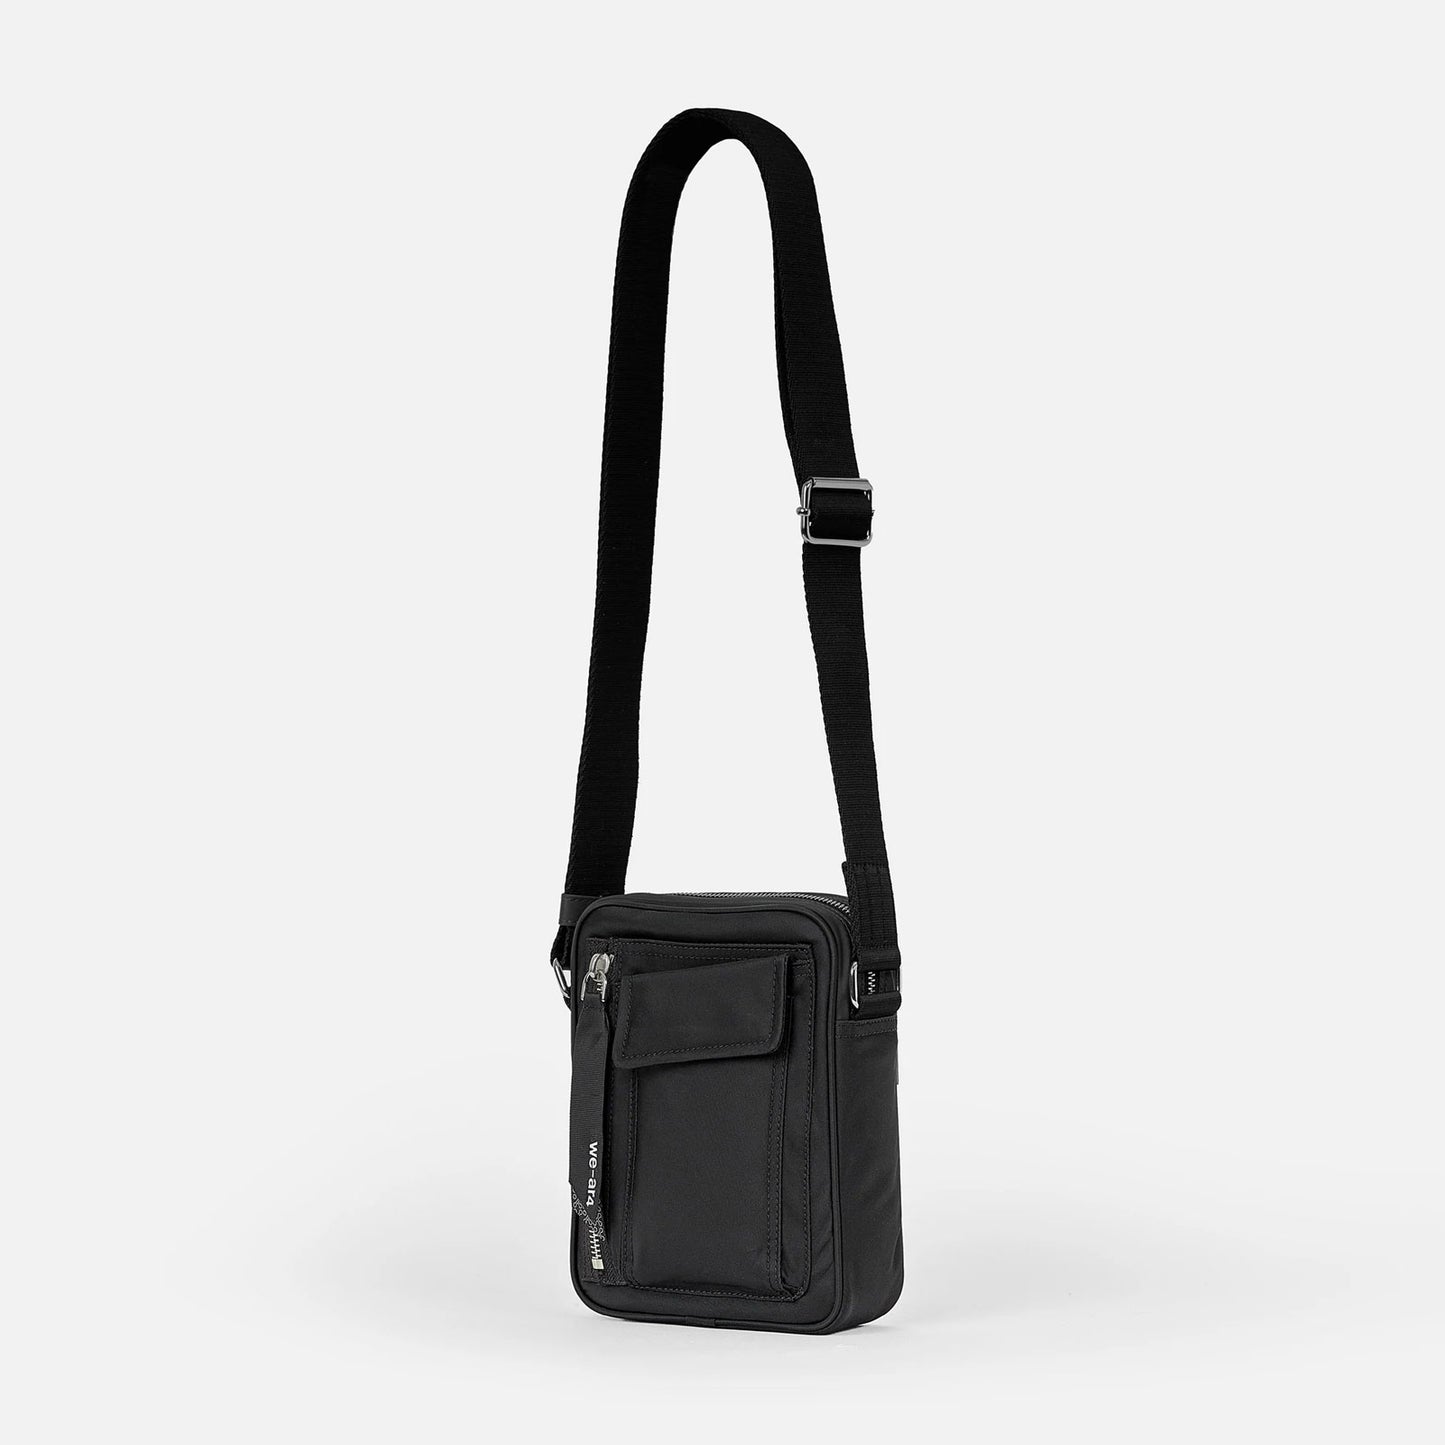 The Godspeed Crossbody Bag in Black